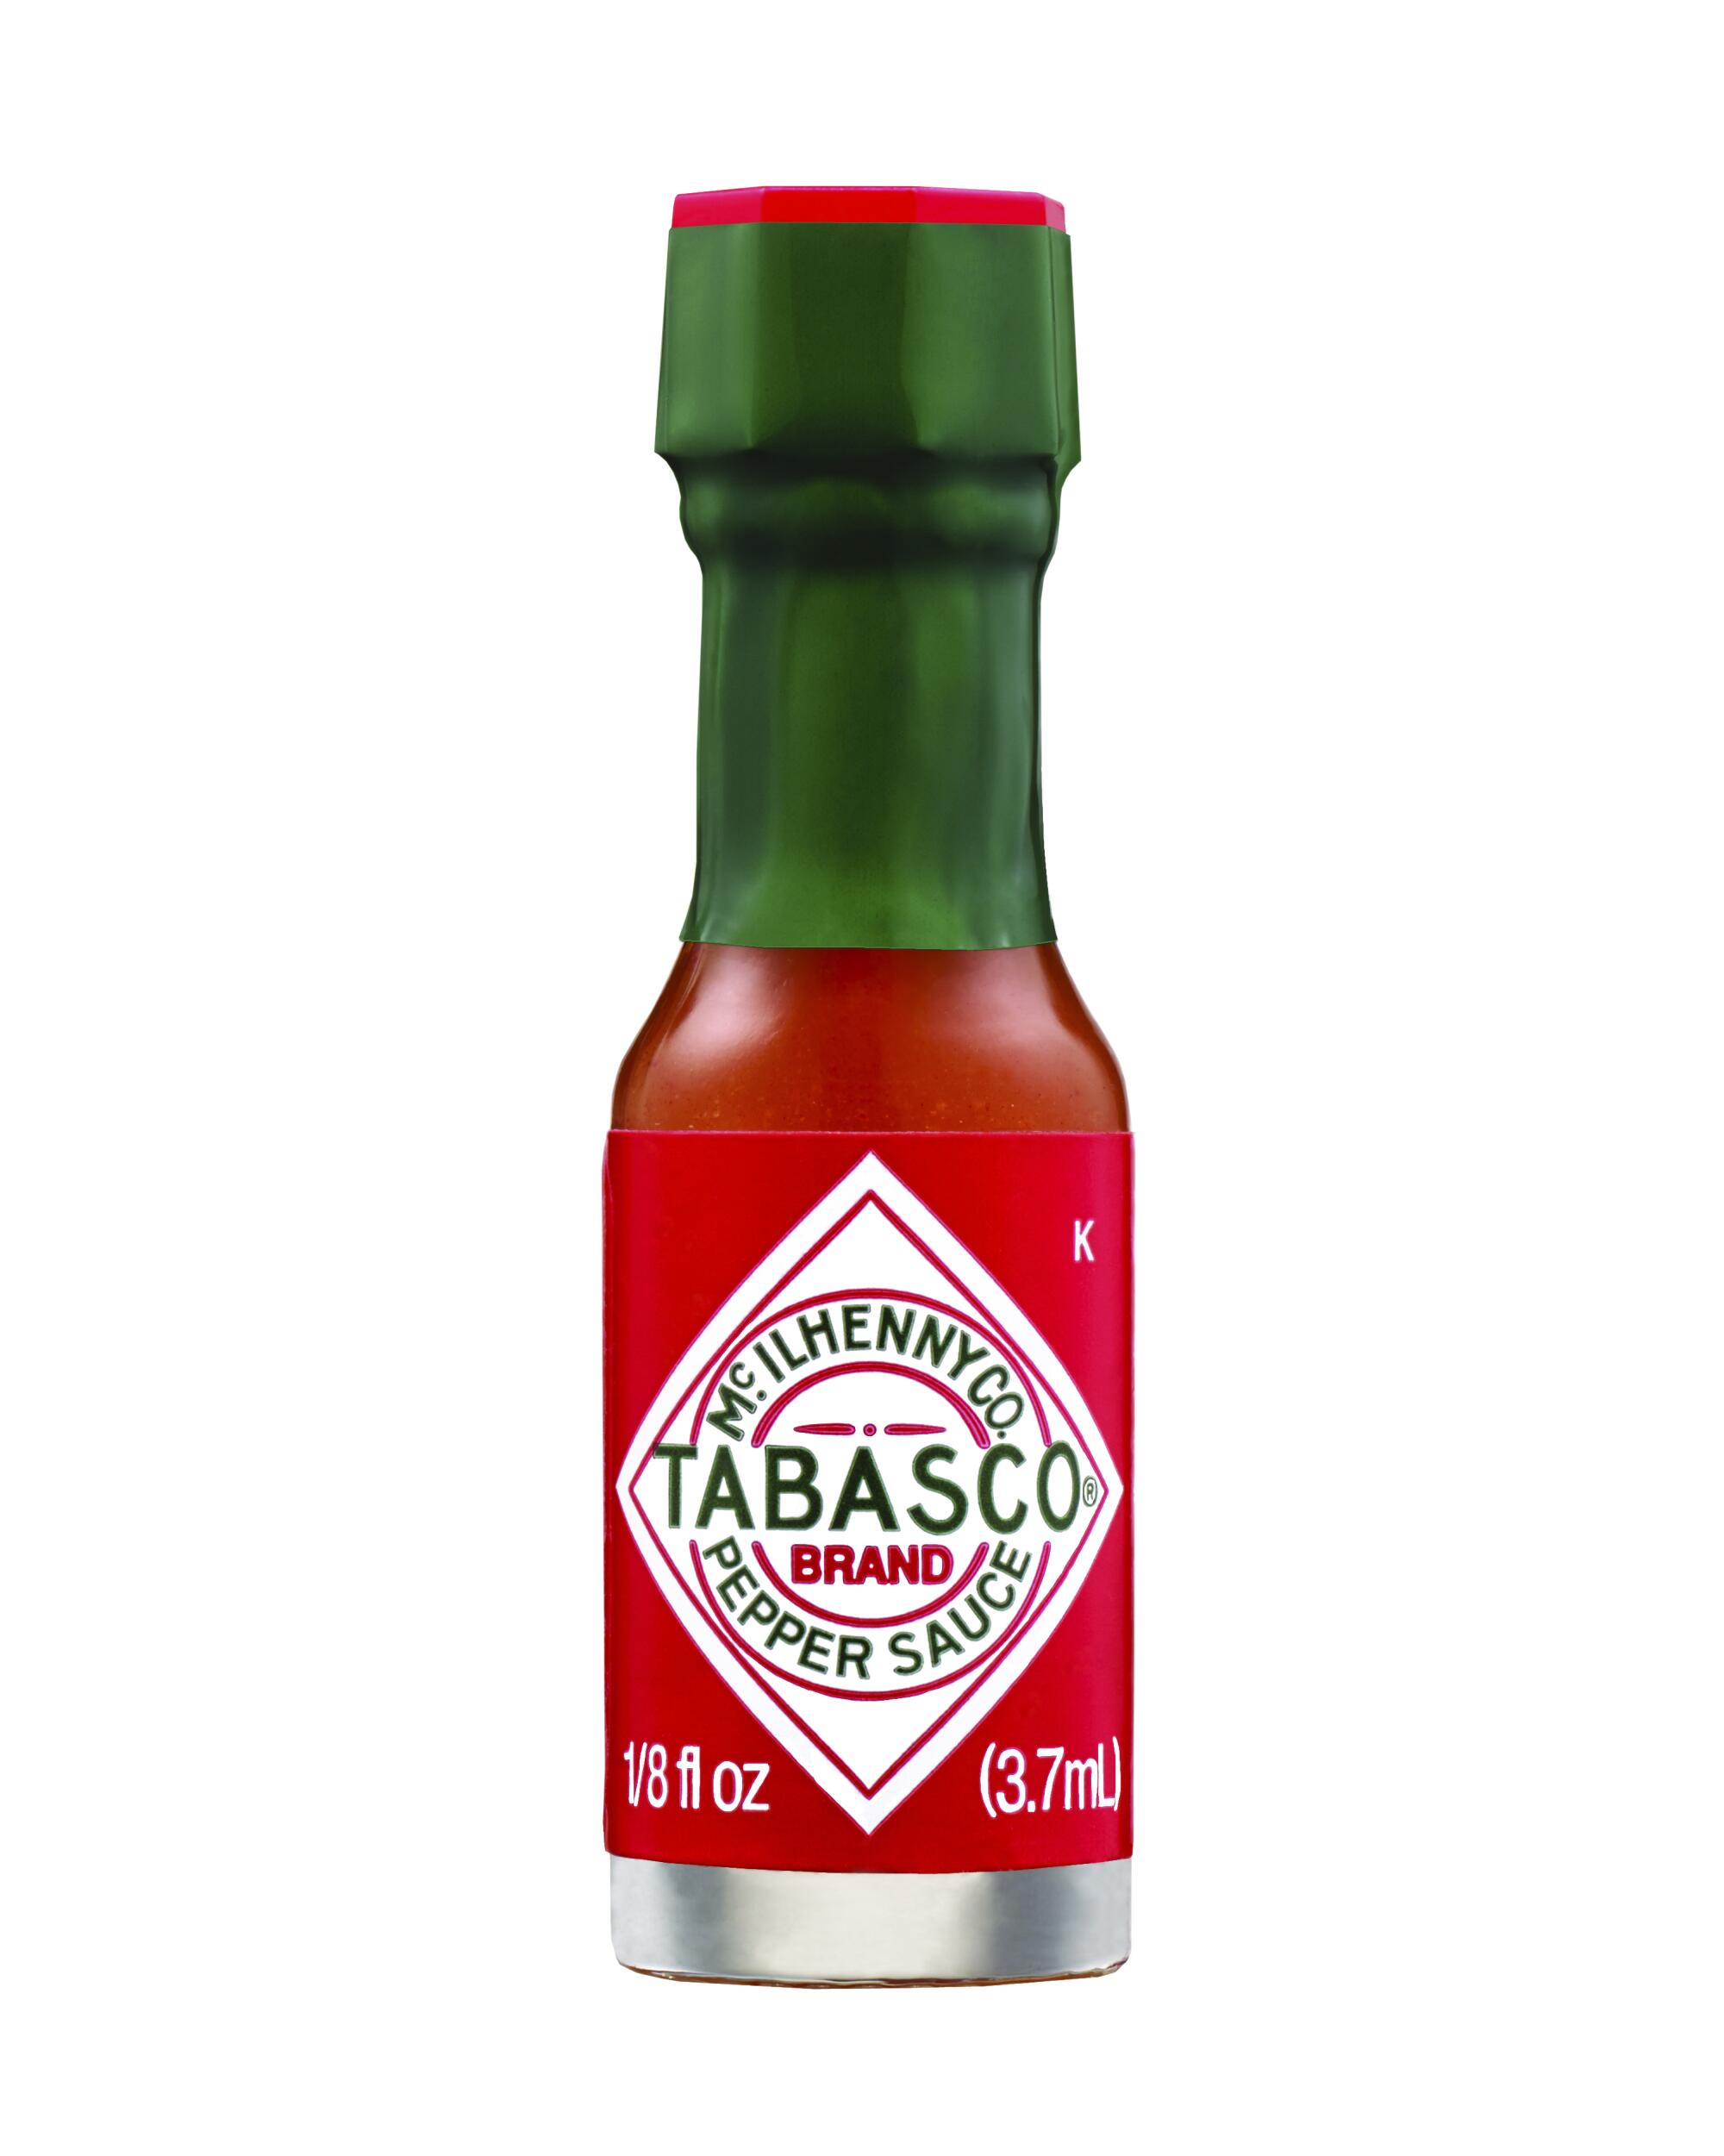 A Tiny 1/8 Ounce Bottle of Tabasco